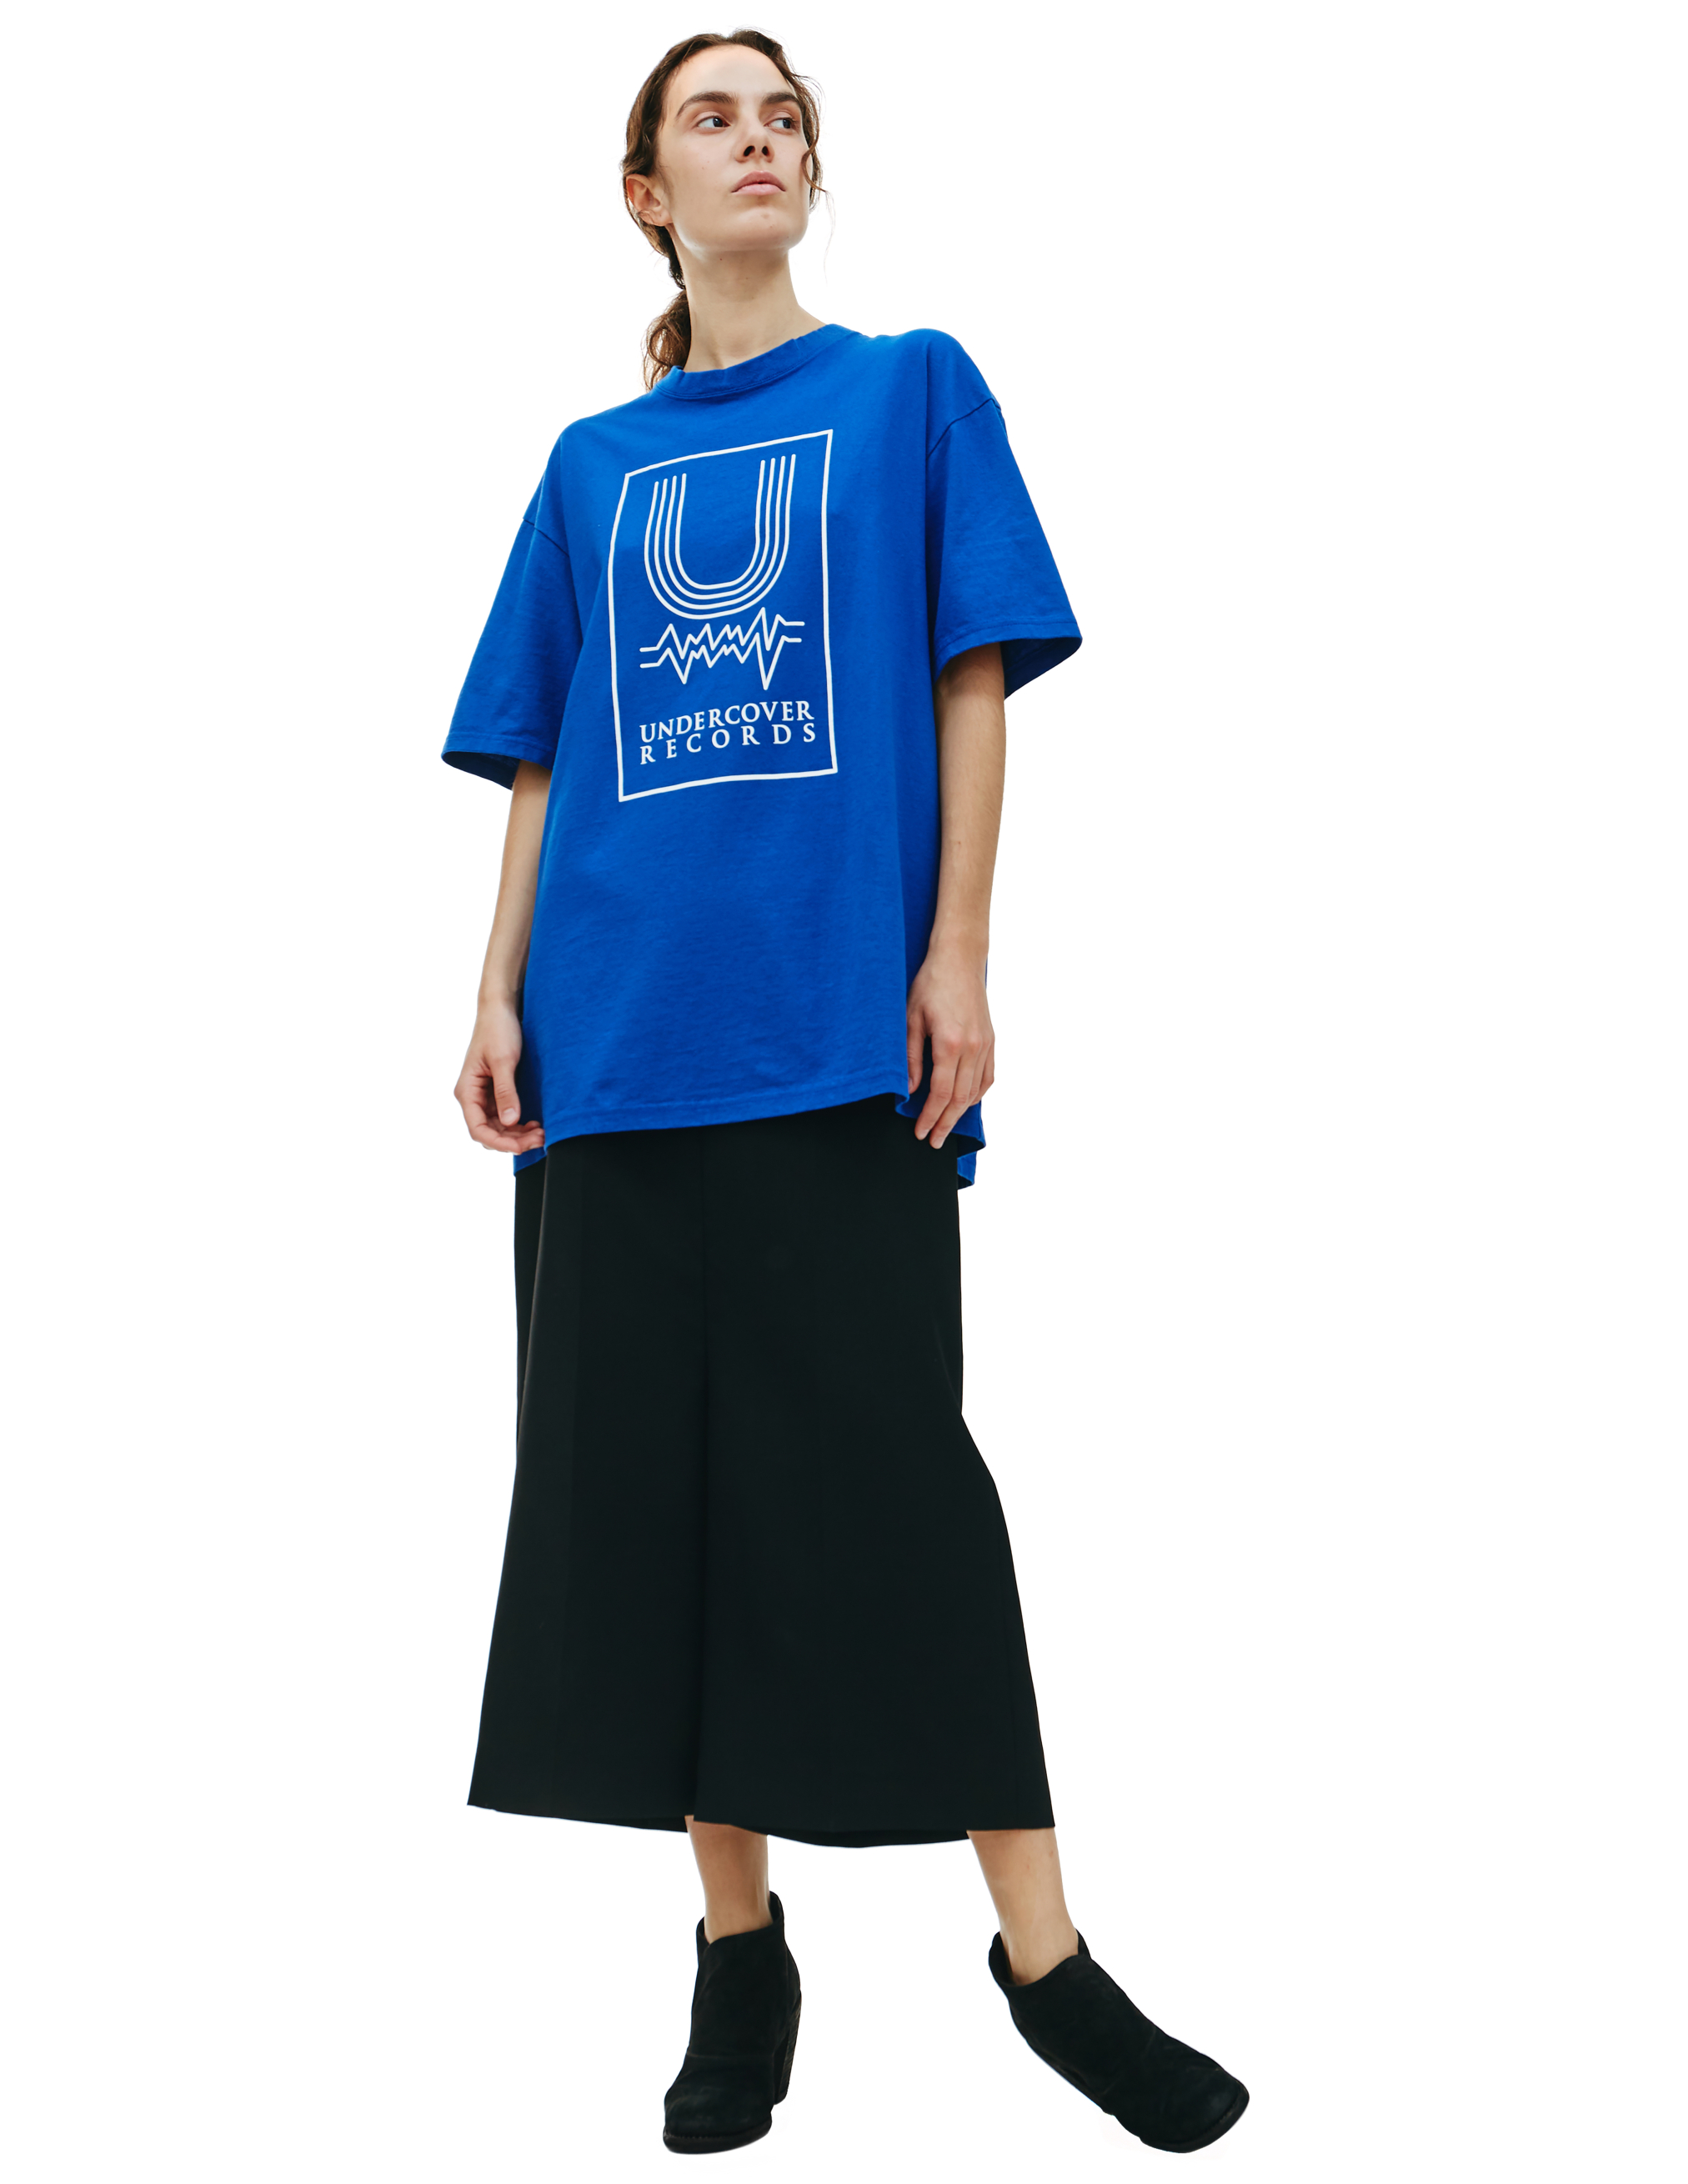 Синяя футболка Undercover Records Undercover UC2B9805/3/BLUE, размер 4;3 UC2B9805/3/BLUE - фото 1